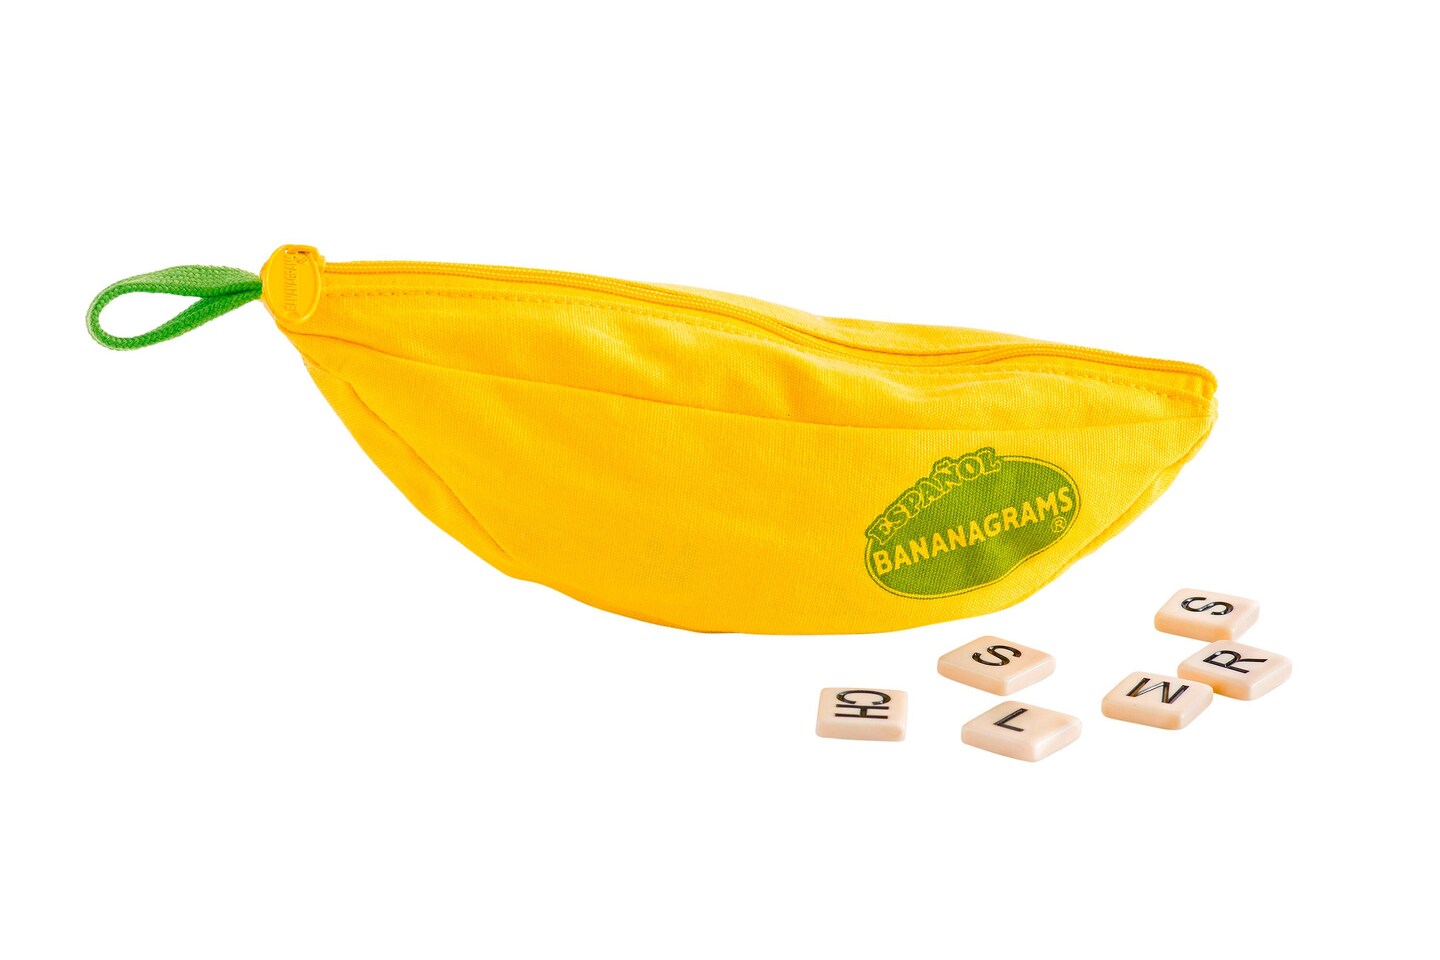 Spanish Bananagrams Game